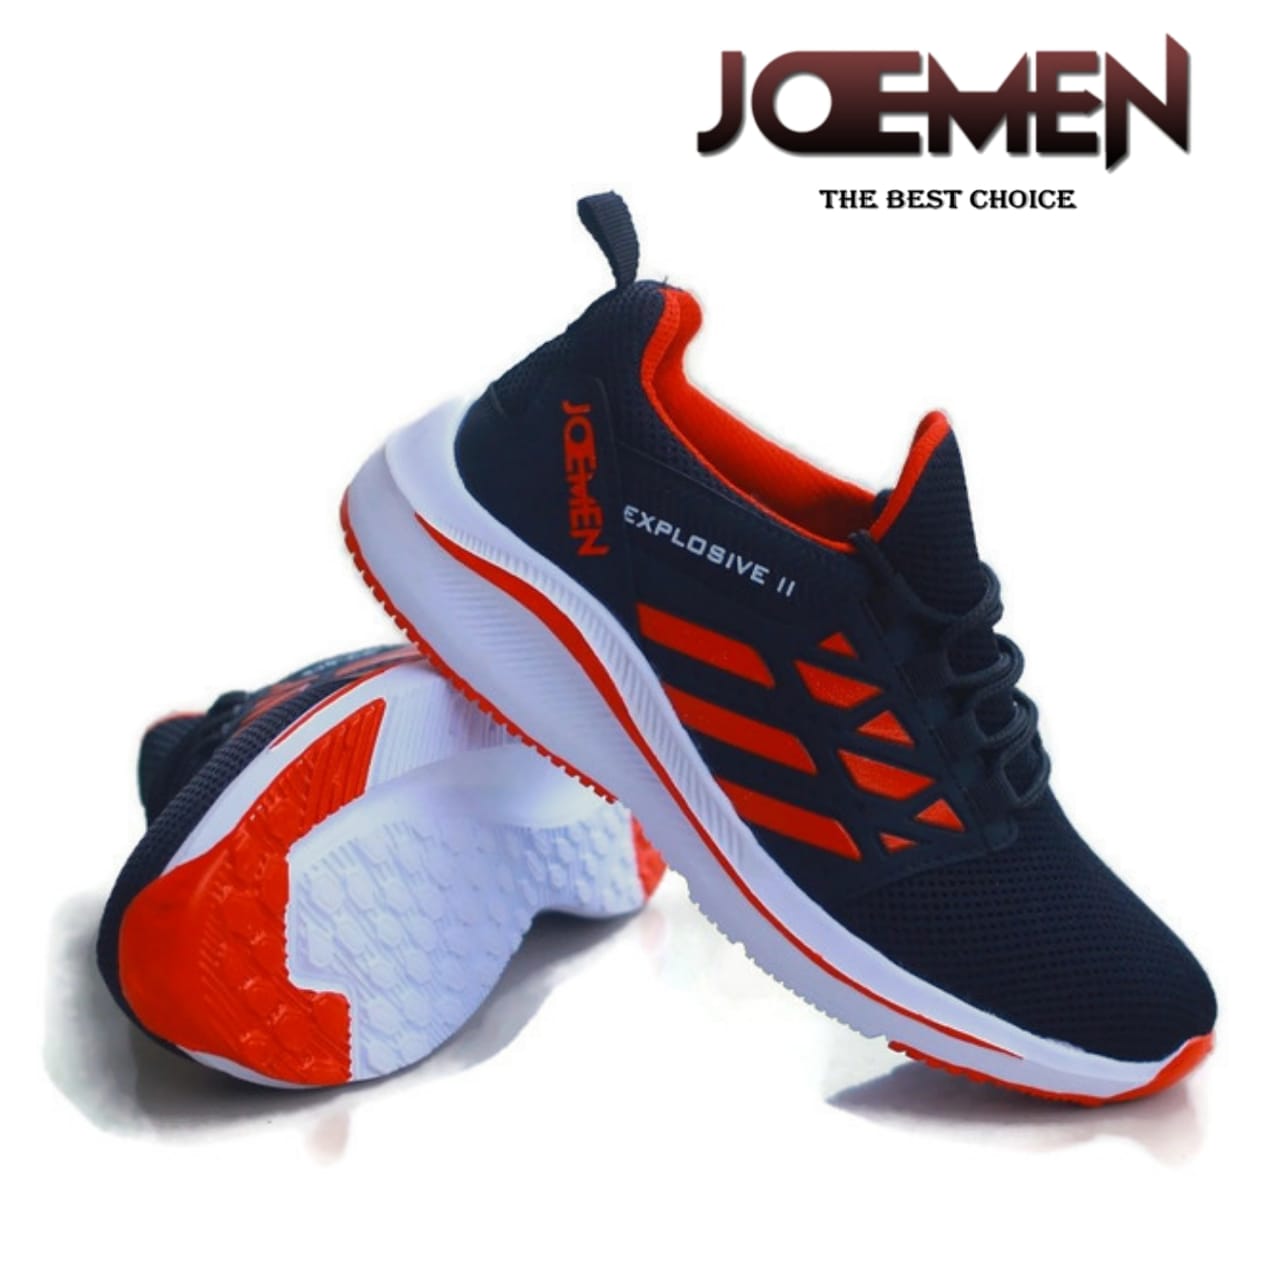 Sepatu JOEMEN J 49 New MODEL SHOES / IMPORT MERAH MIX COLOR Sport Jogging Running SNEAKERS High Quality Kasual Cowok Cewek HARAJUKU STYLE UNISEX CASUAL 100% Real picture